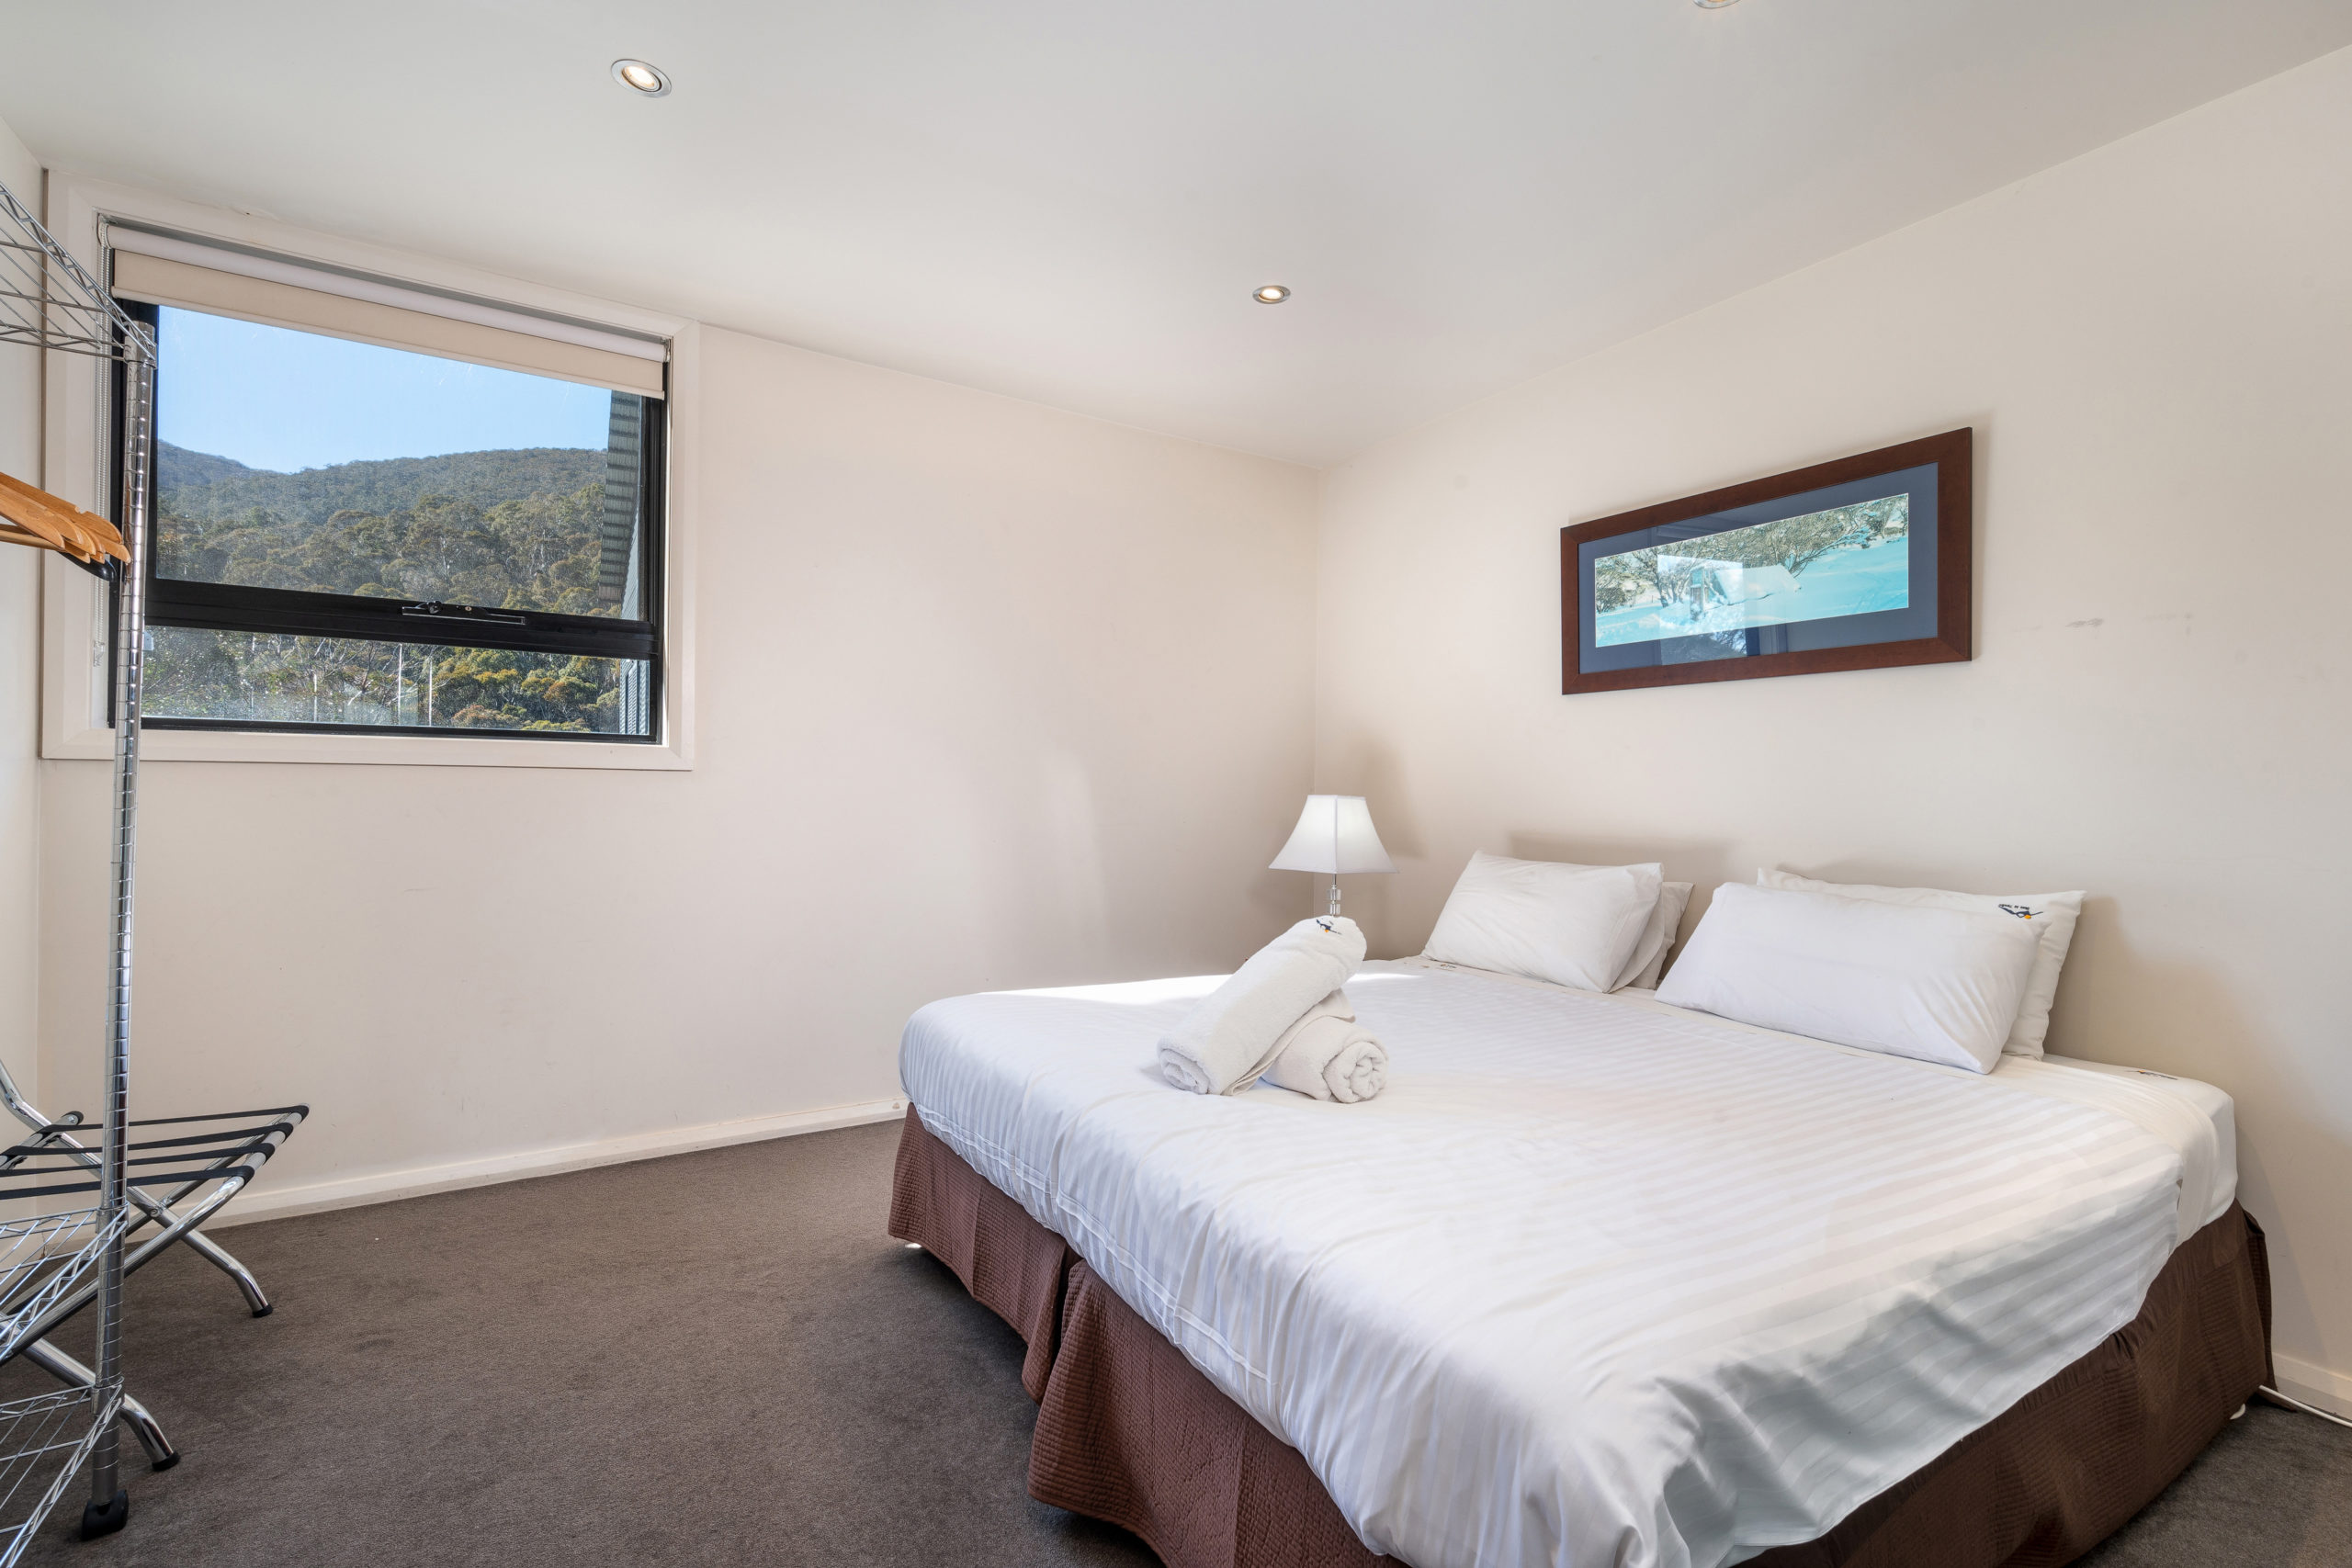 Large One Bedroom Plus Loft Chalet in Thredbo! – $975,000